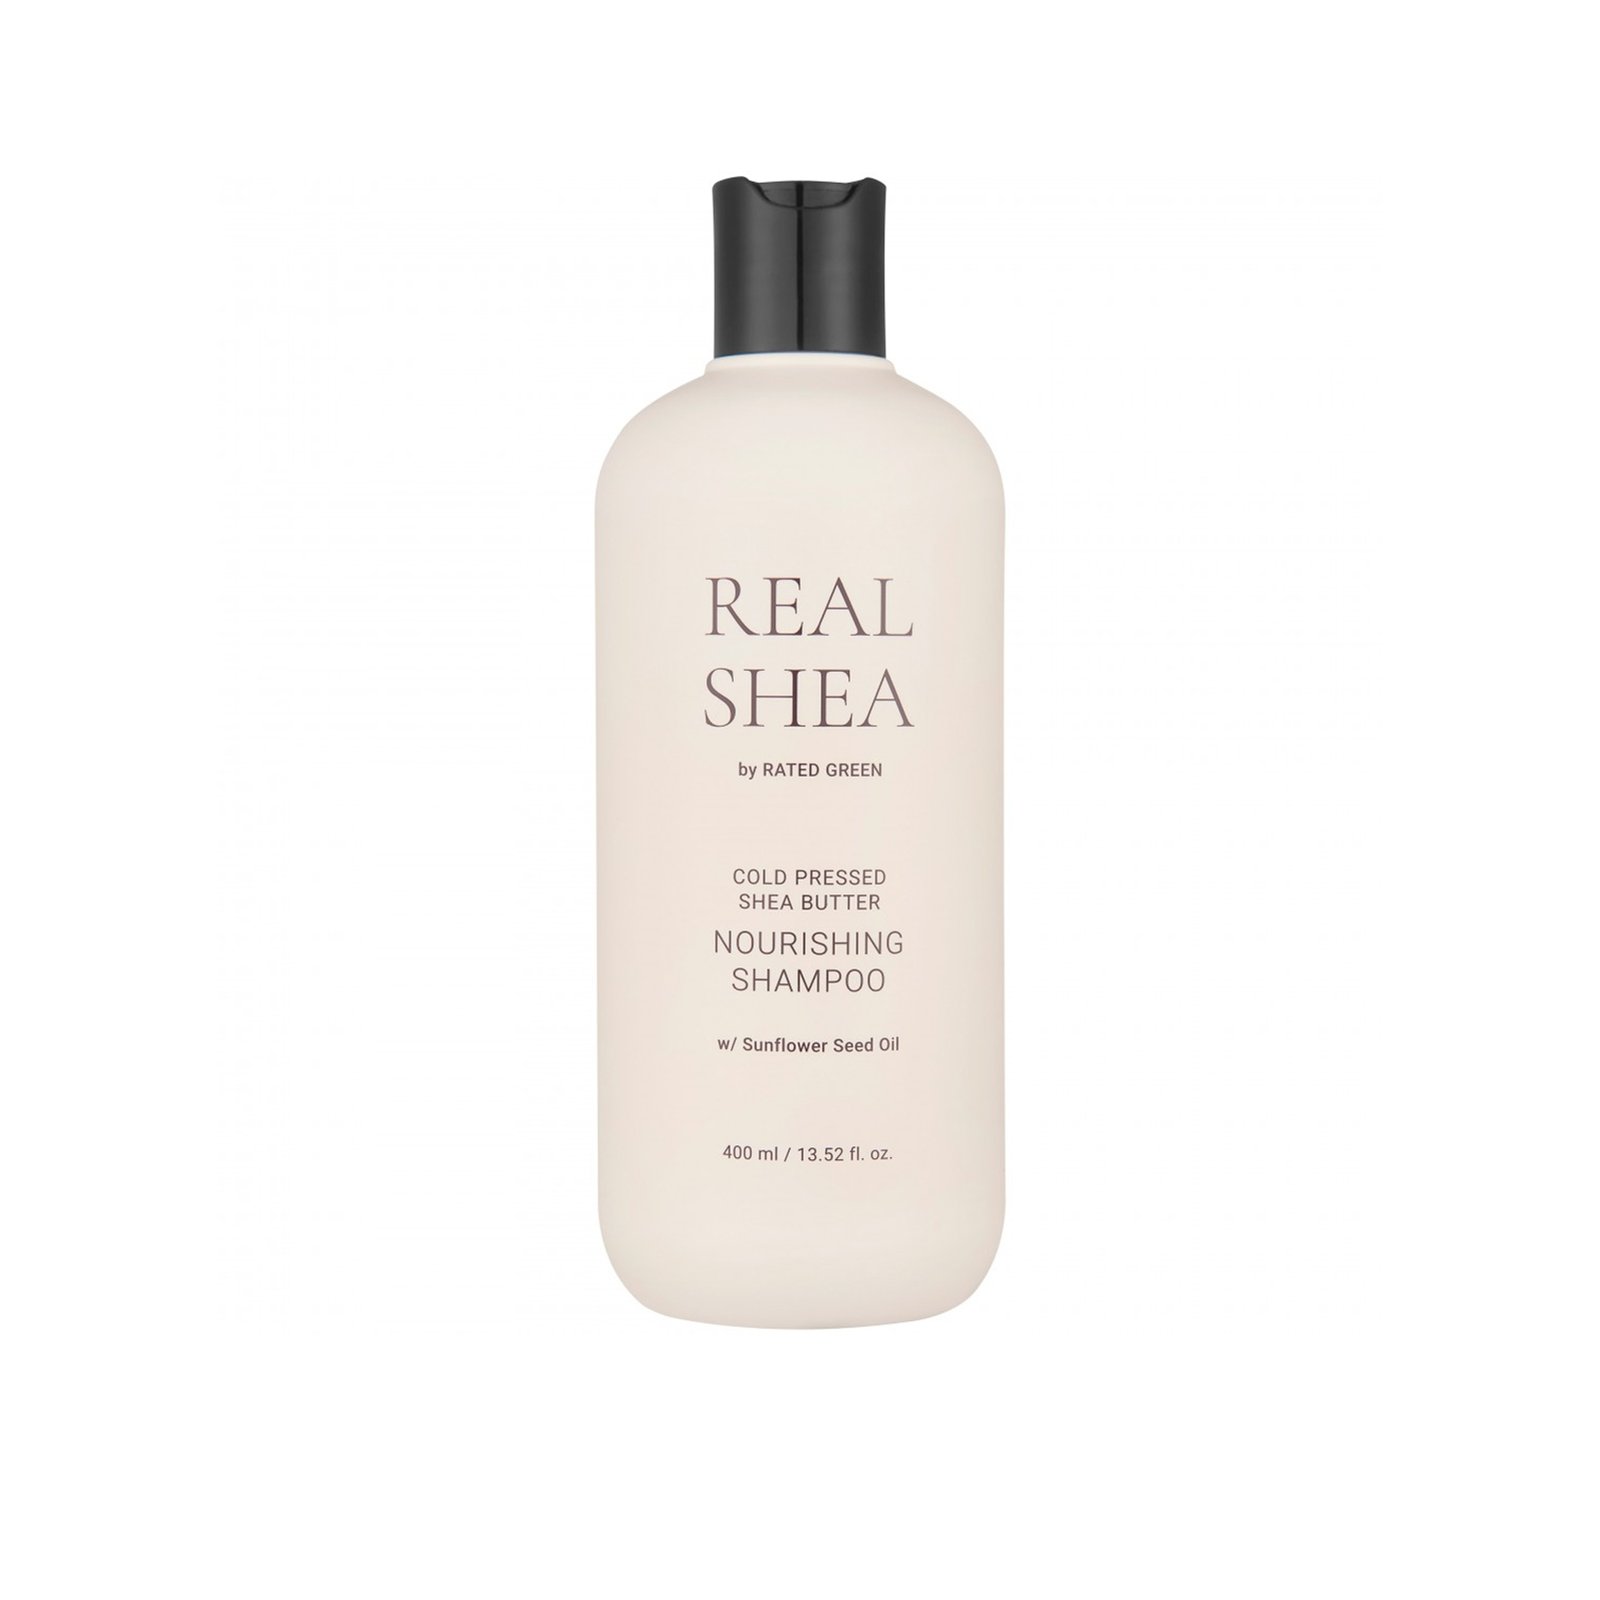 Rated Green Real Shea Nourishing Shampoo 400ml